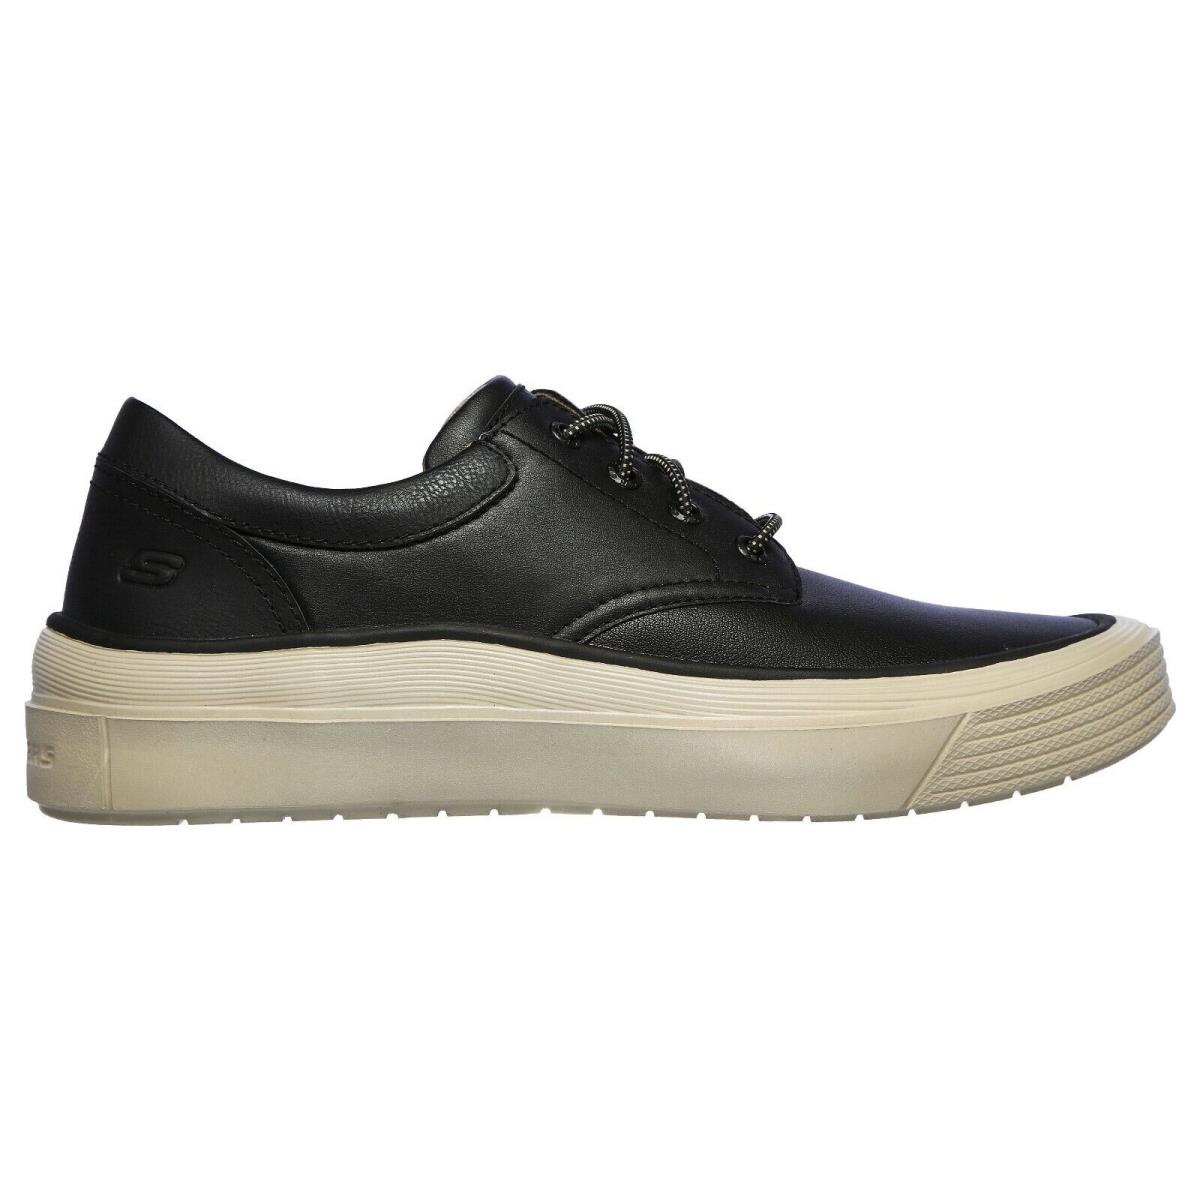 Skechers shoes Viewport Gloren - Black/Natural 3